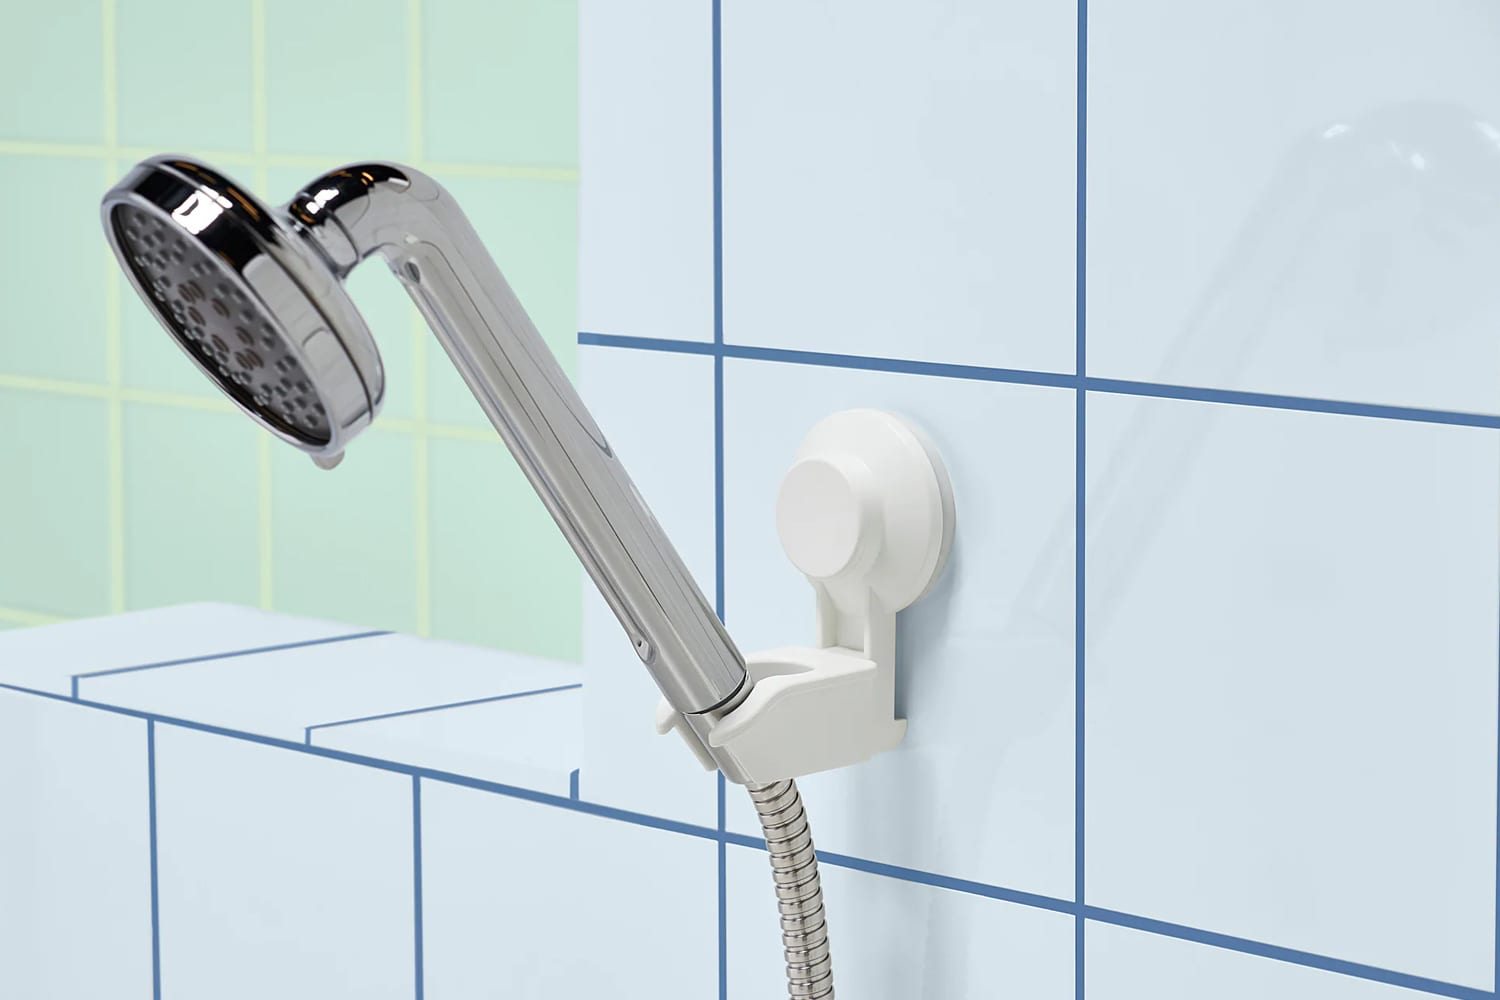 https://cdn.apartmenttherapy.info/image/upload/v1562947103/at/living/renter-bath-organizers-ikea-showerhead-holder.jpg